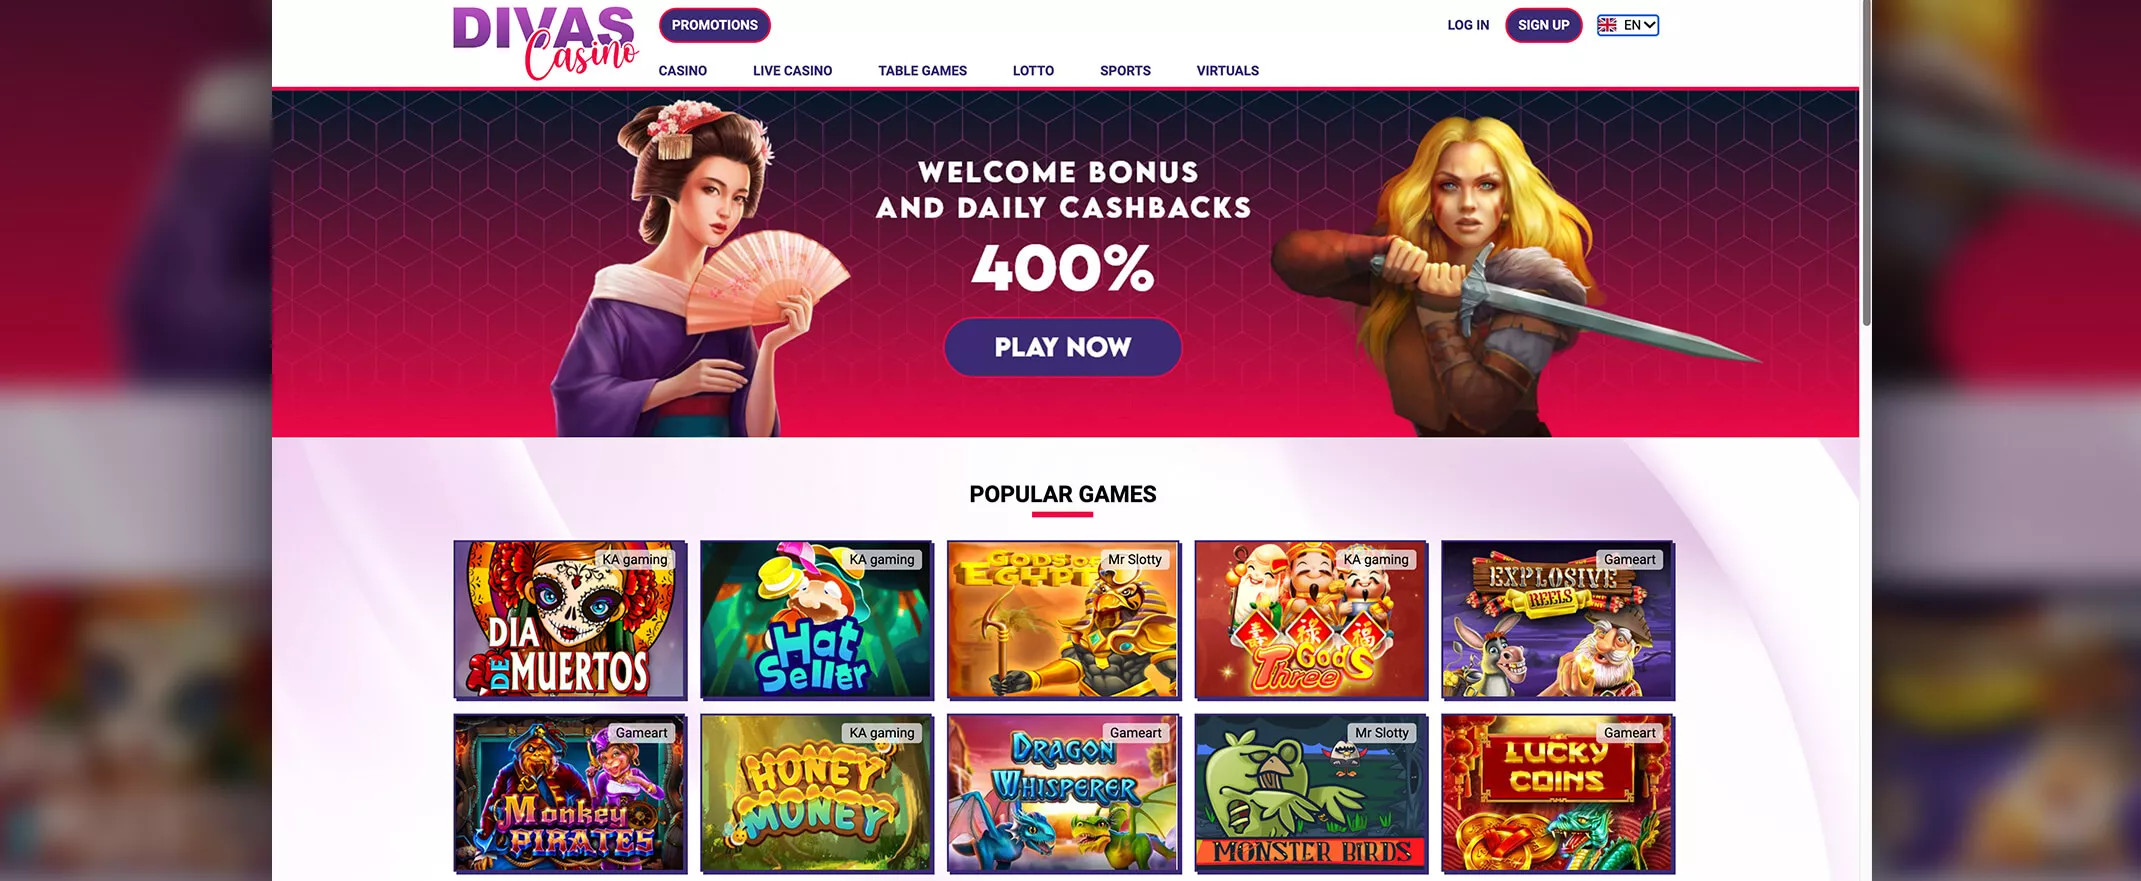 DivasLuck casino review screenshot of the homepage